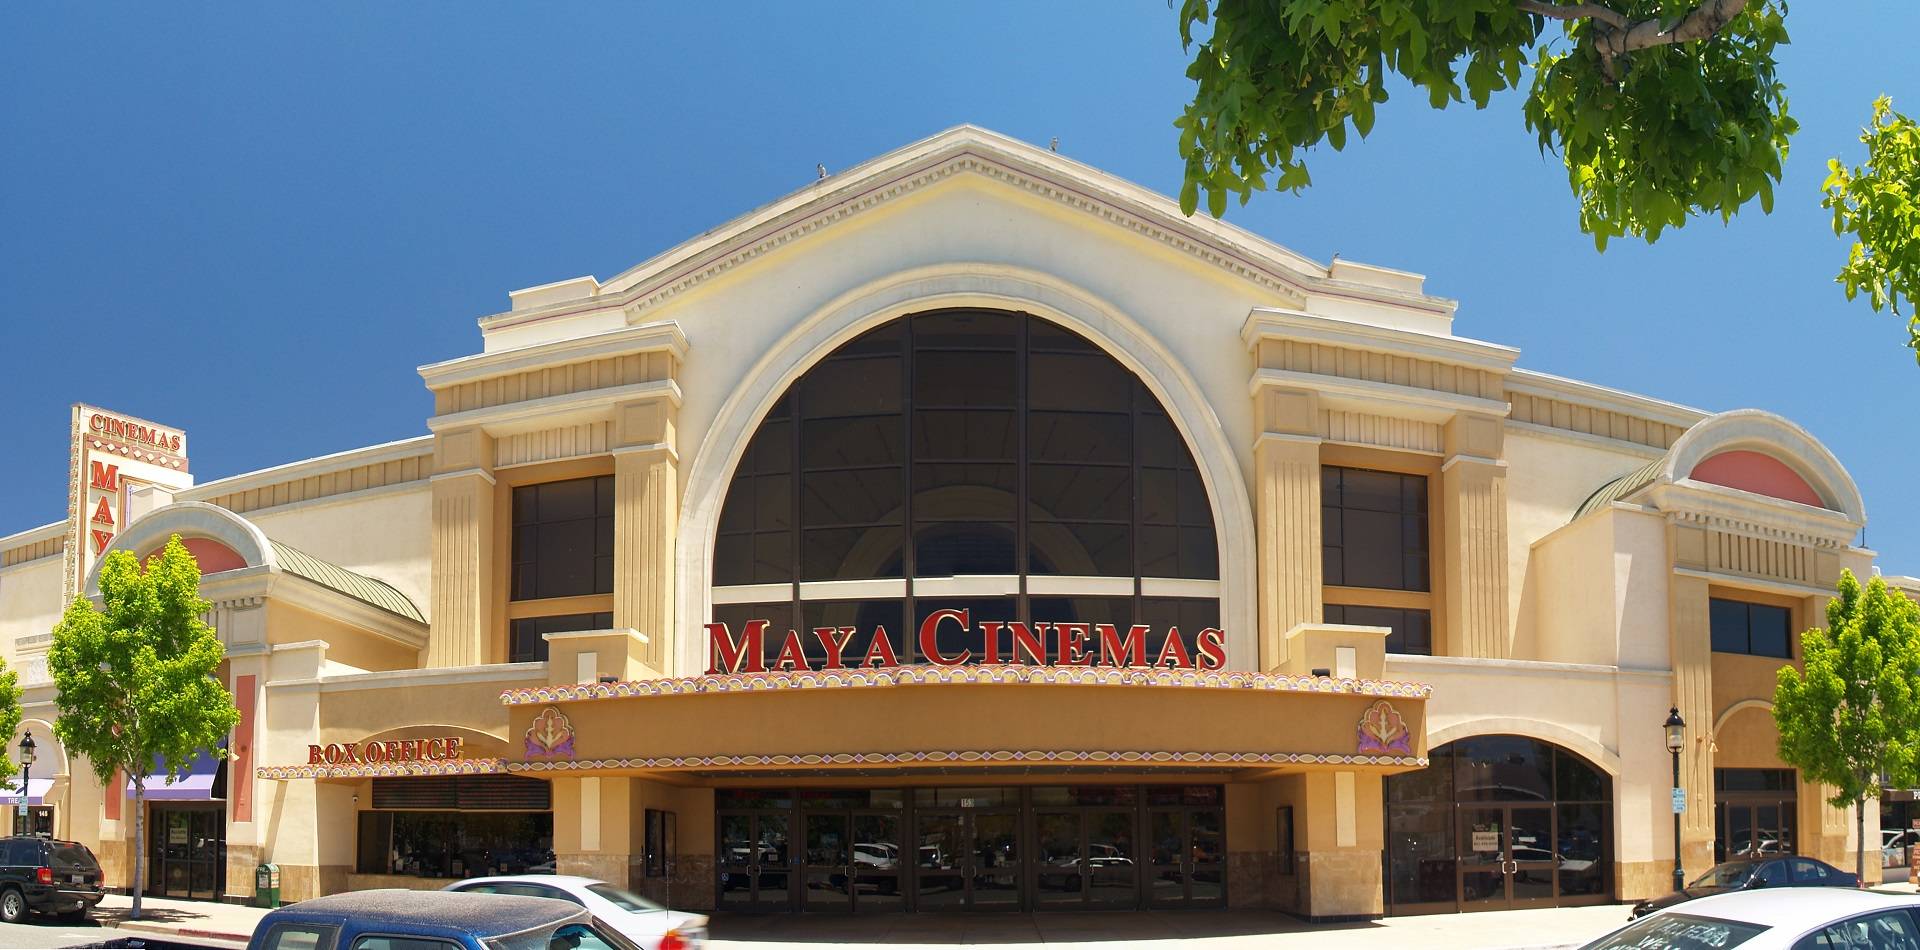 The Maya Cinemas in Salinas. Stephen Gough/Flickr